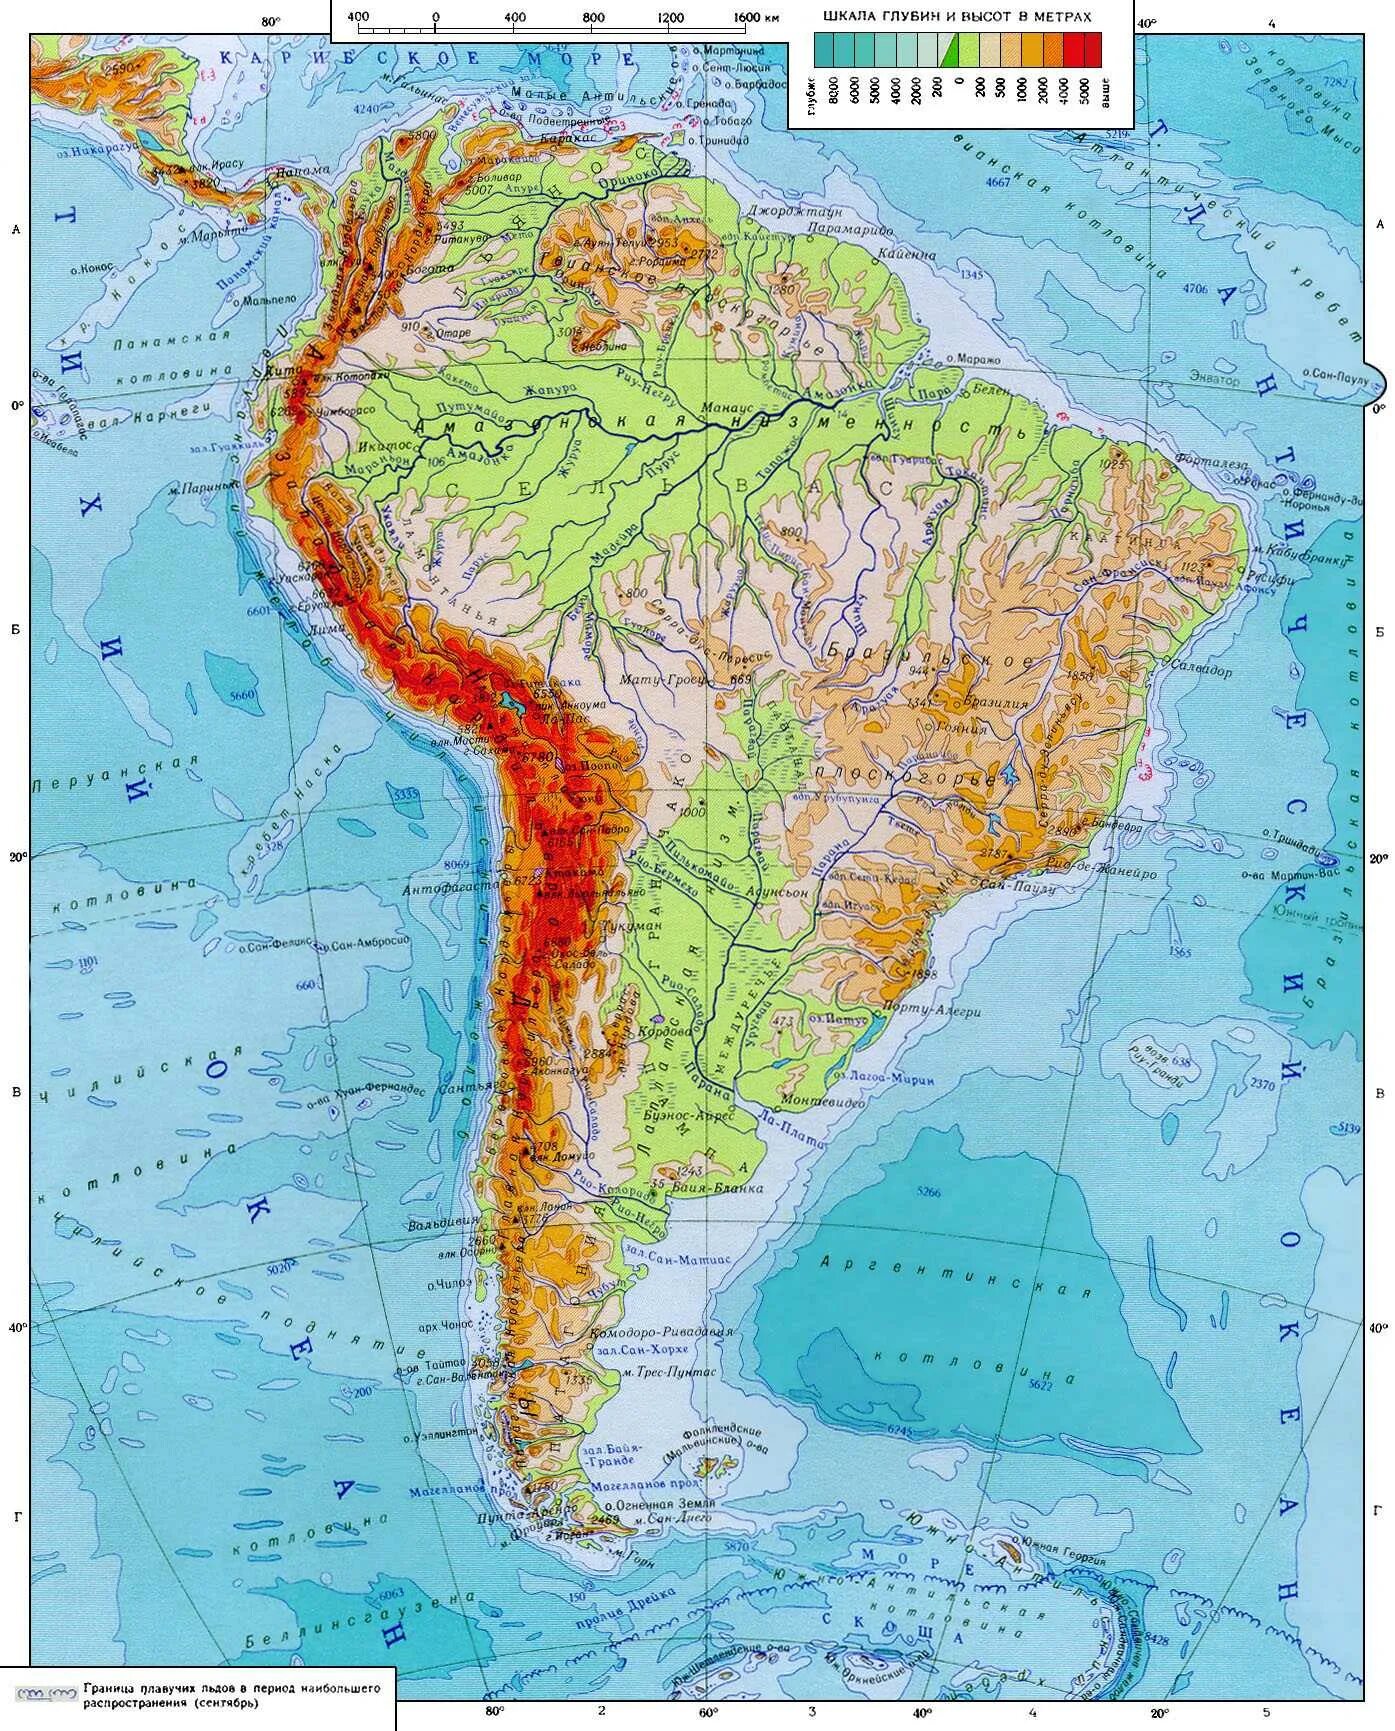 Горы Анды на карте Южной Америки. Горы Анды на физической карте Южной Америки. Физическая карта Южной Америки.